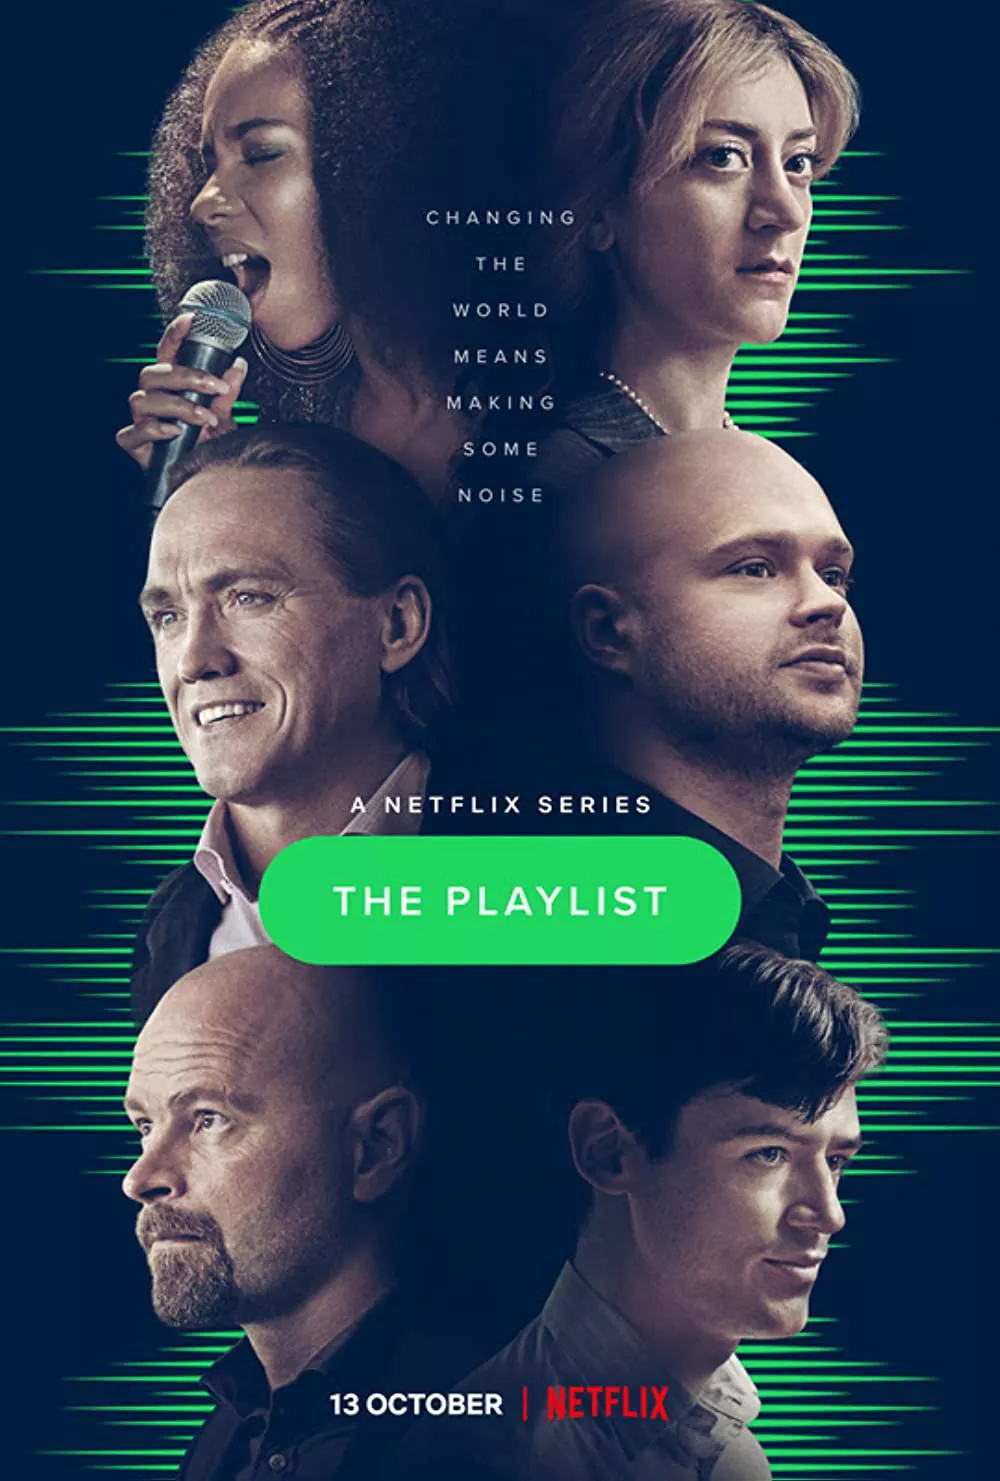 Trailer Από Το "The Playlist" Του Netflix